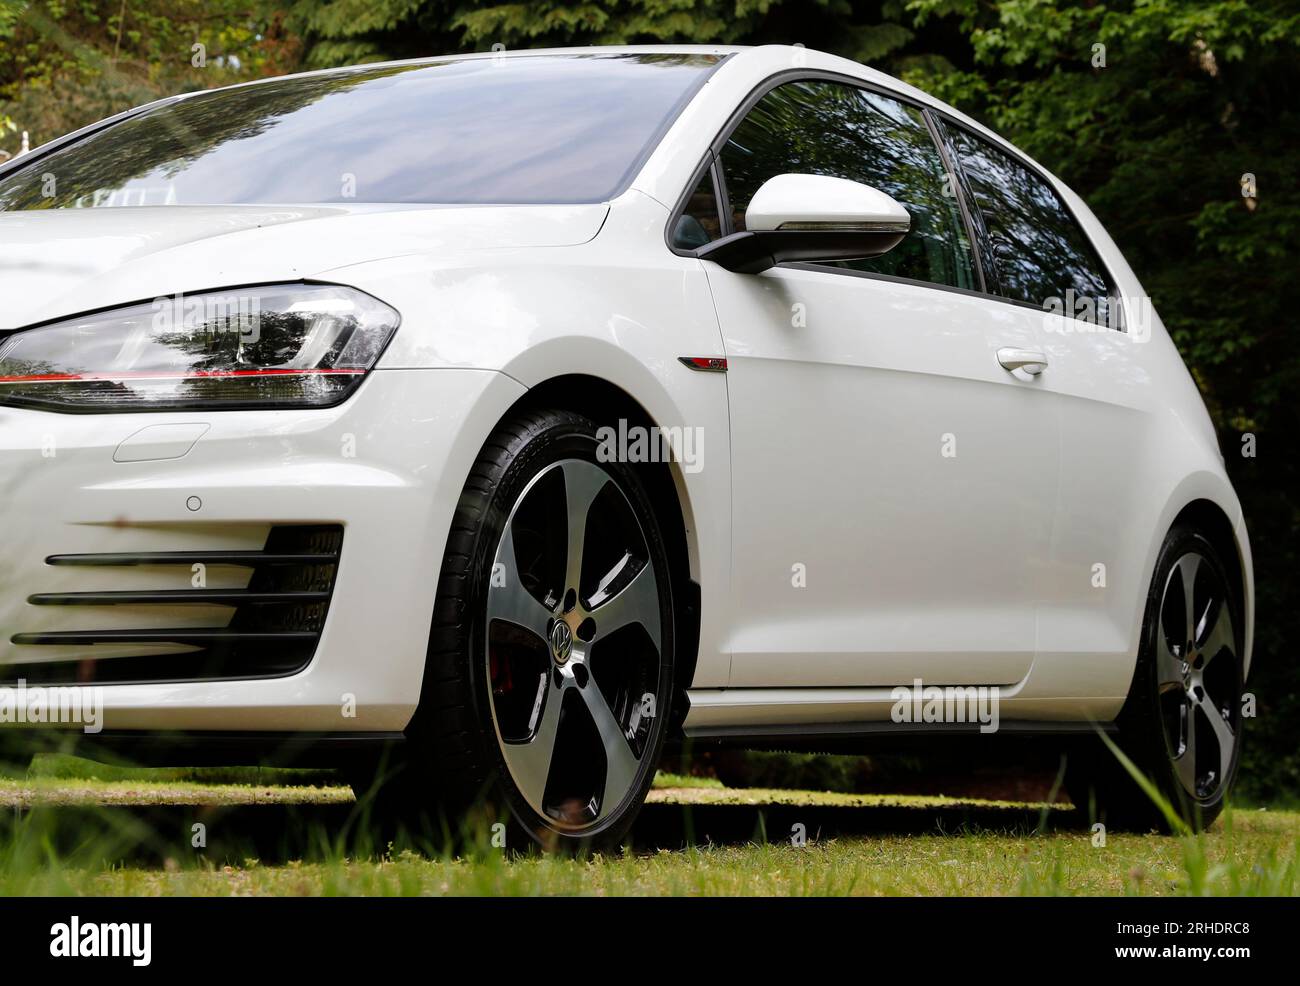 New White Car, Volkswagen Golf GTI MK7 3 door hatchback petrol car Stock Photo